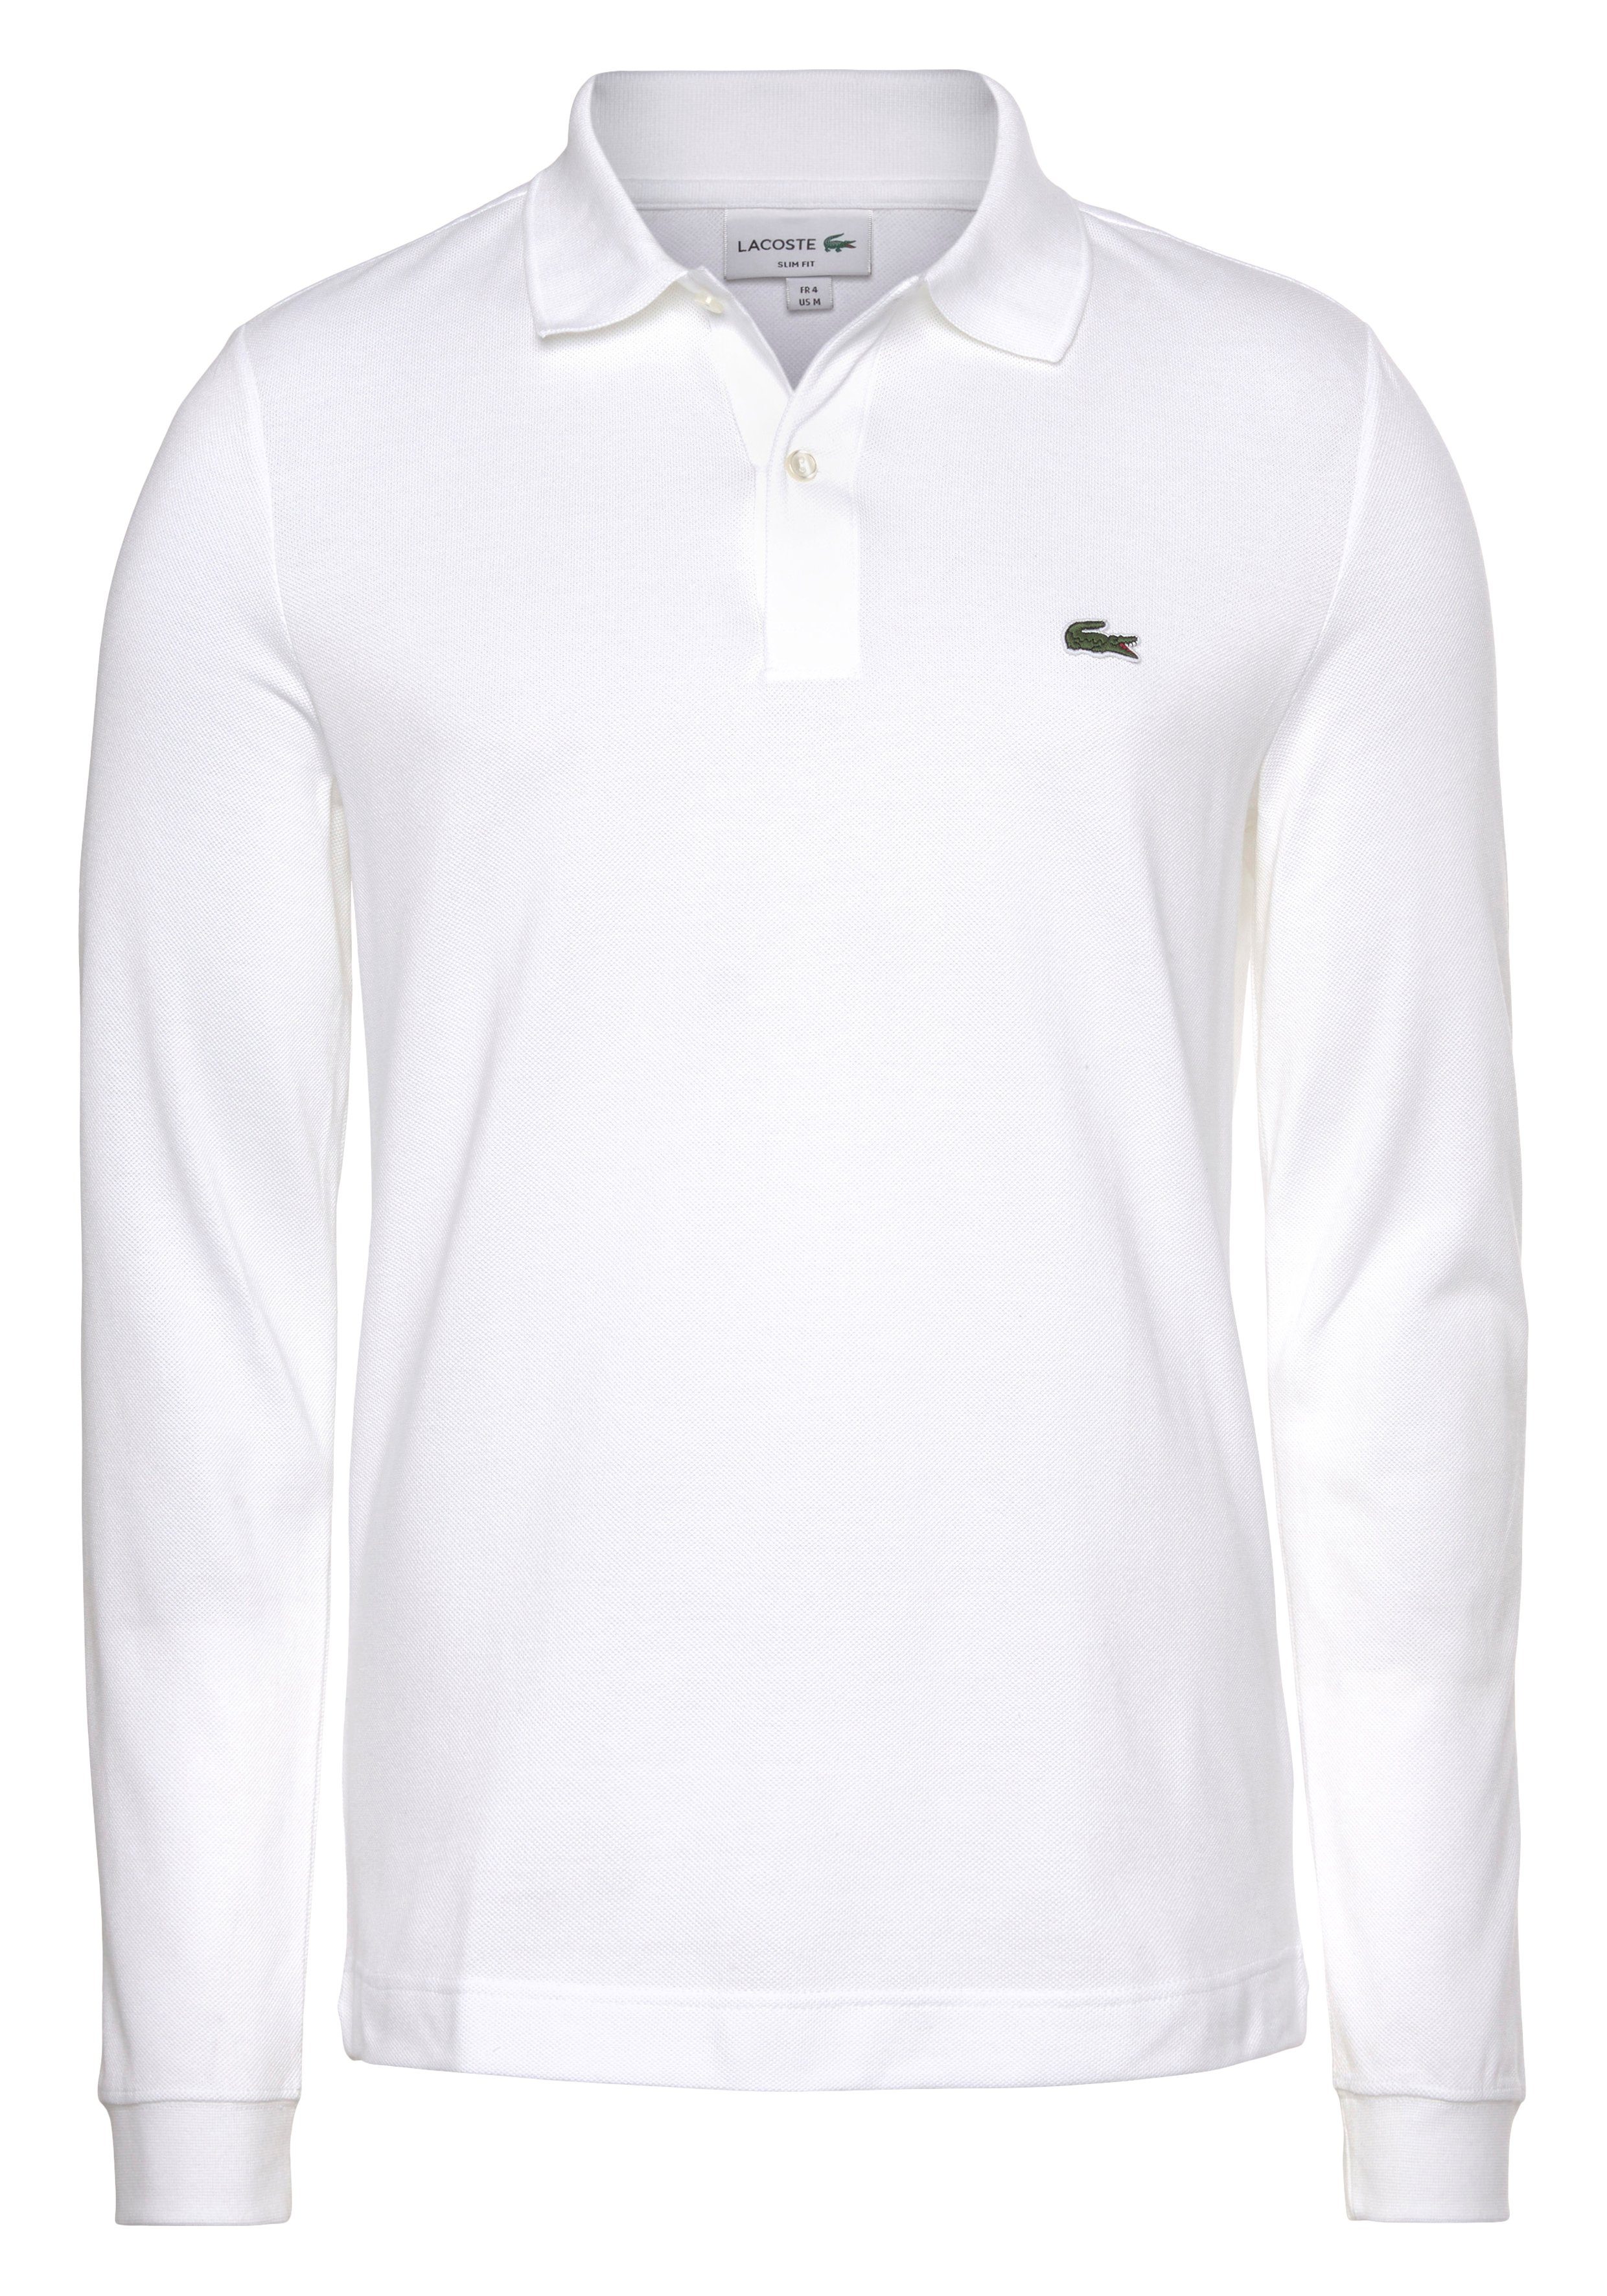 Lacoste Langarm-Poloshirt POLO mit Knopfleiste am Ausschnitt weiß